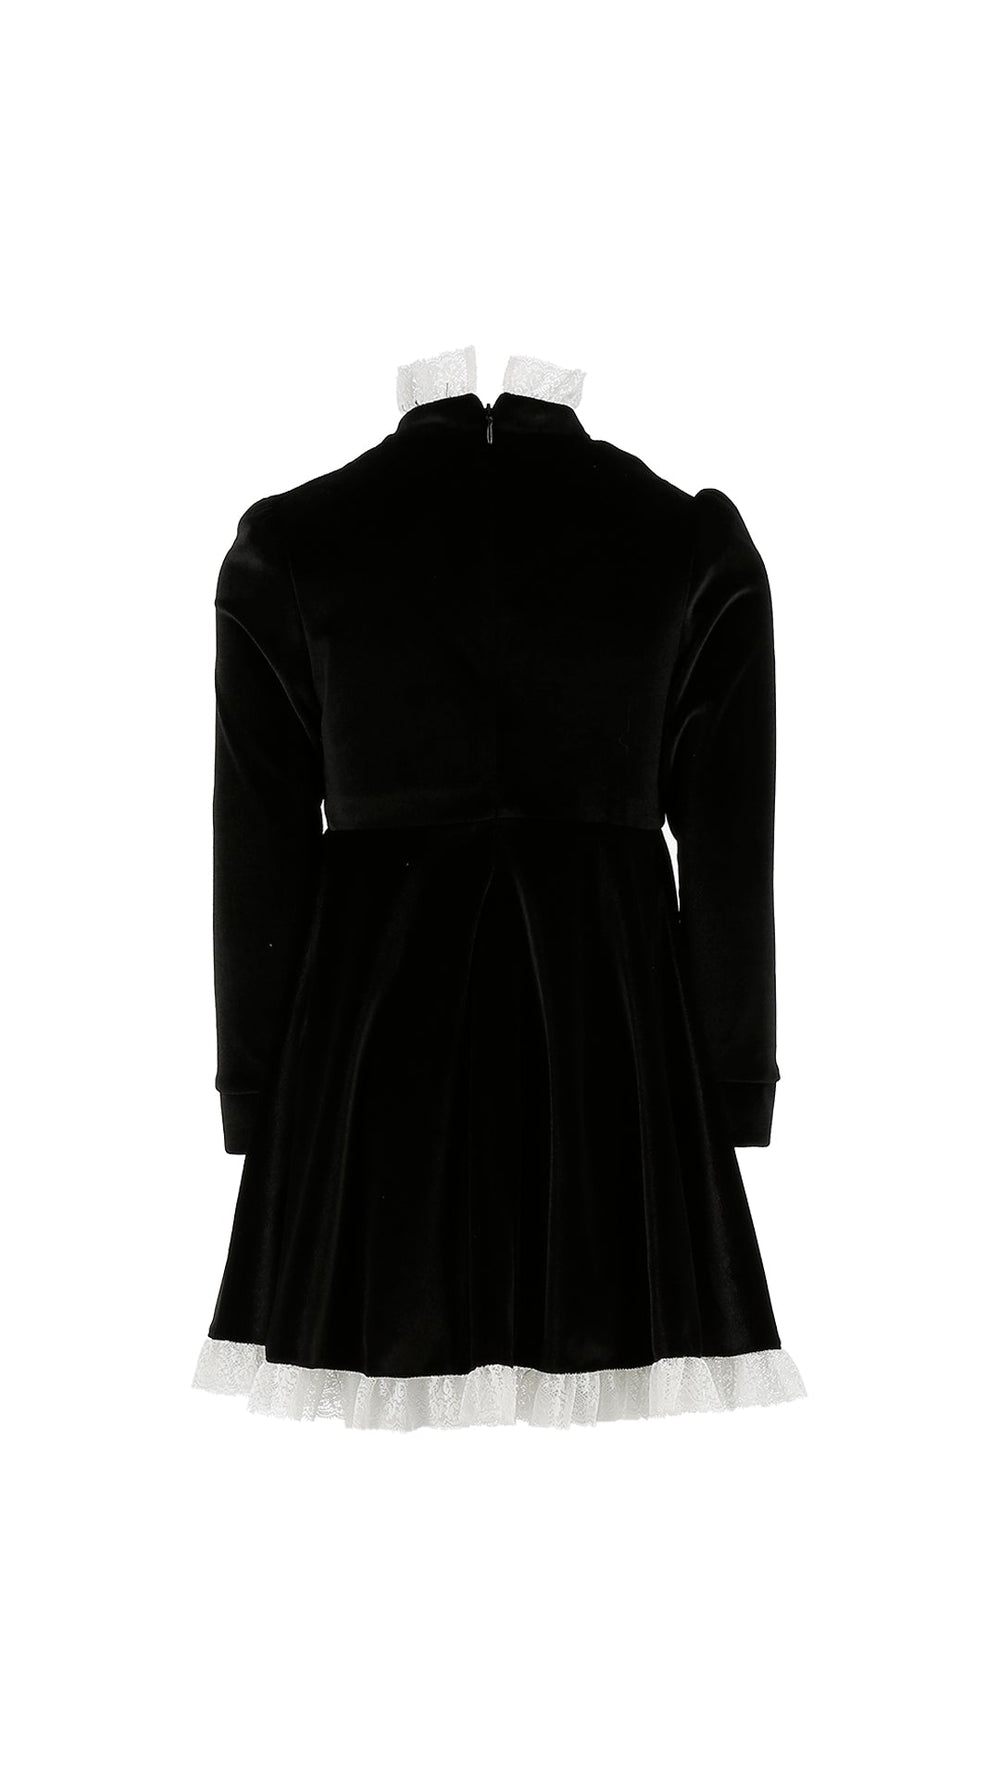 Velvet Dress Collared W/ Lace Trim - Black - Posh New York